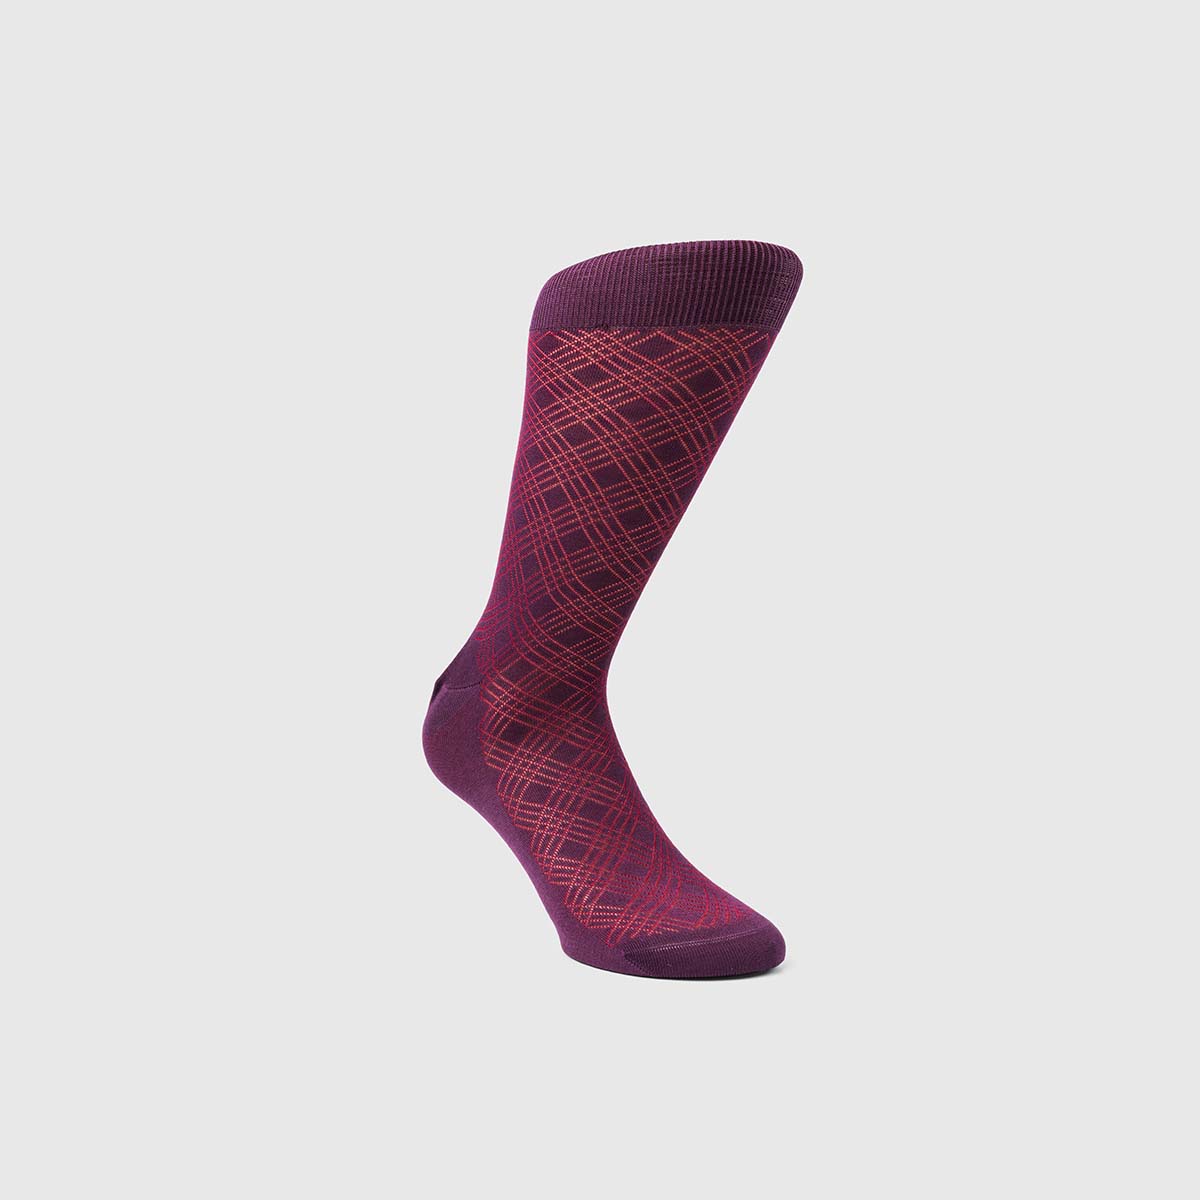 Bresciani 1970 Cotton Socks in Red Violet – L